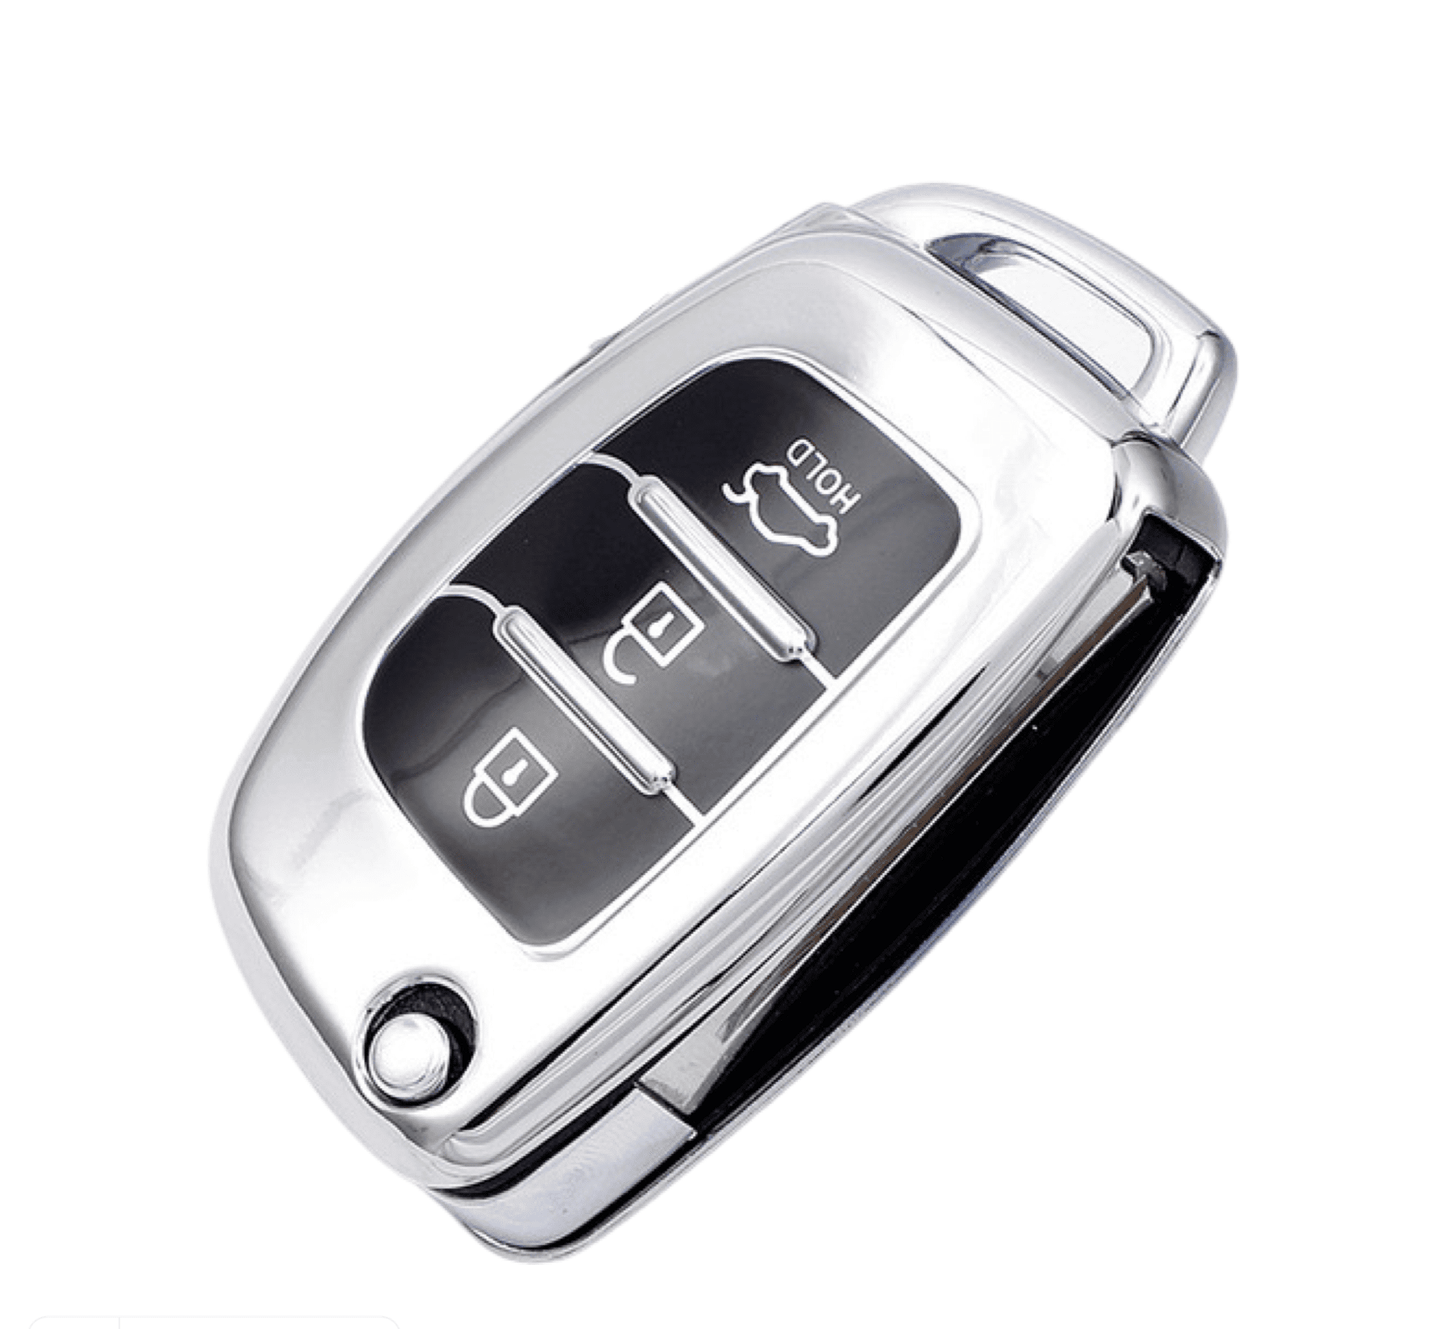 Hyundai key cover silver | i20, accent, i40, iX35, Santa Fe, Tucson key fob cover | Hyundai Accessories - Keysleeves